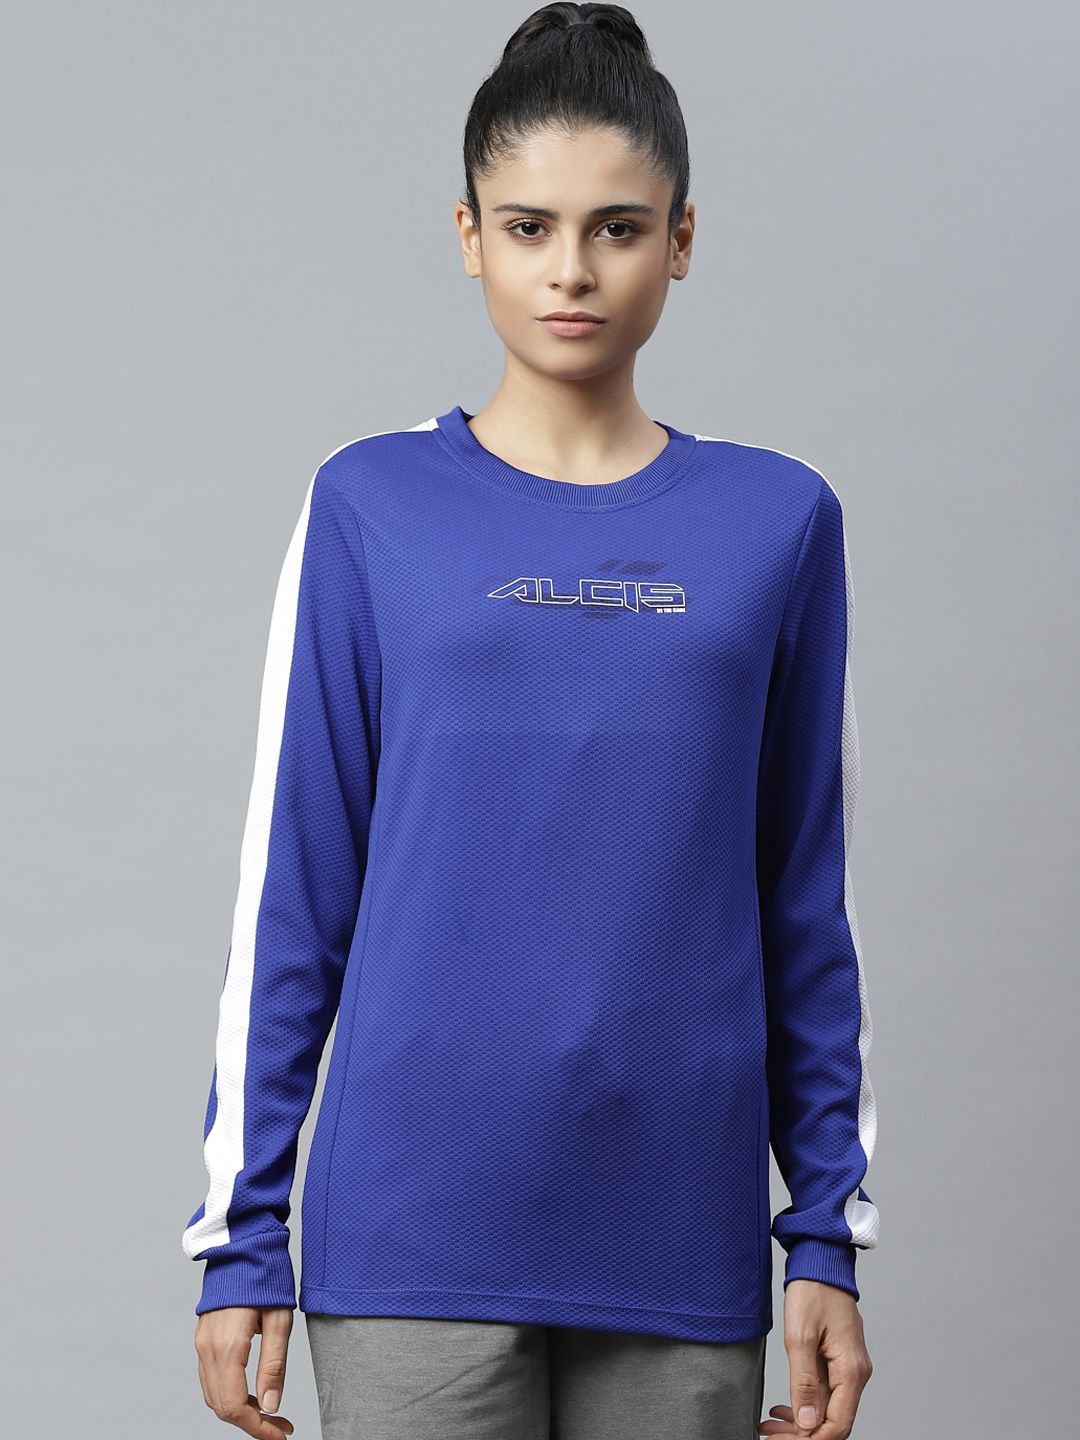 Alcis Women Blue Self Design Sweatshirt Price in India